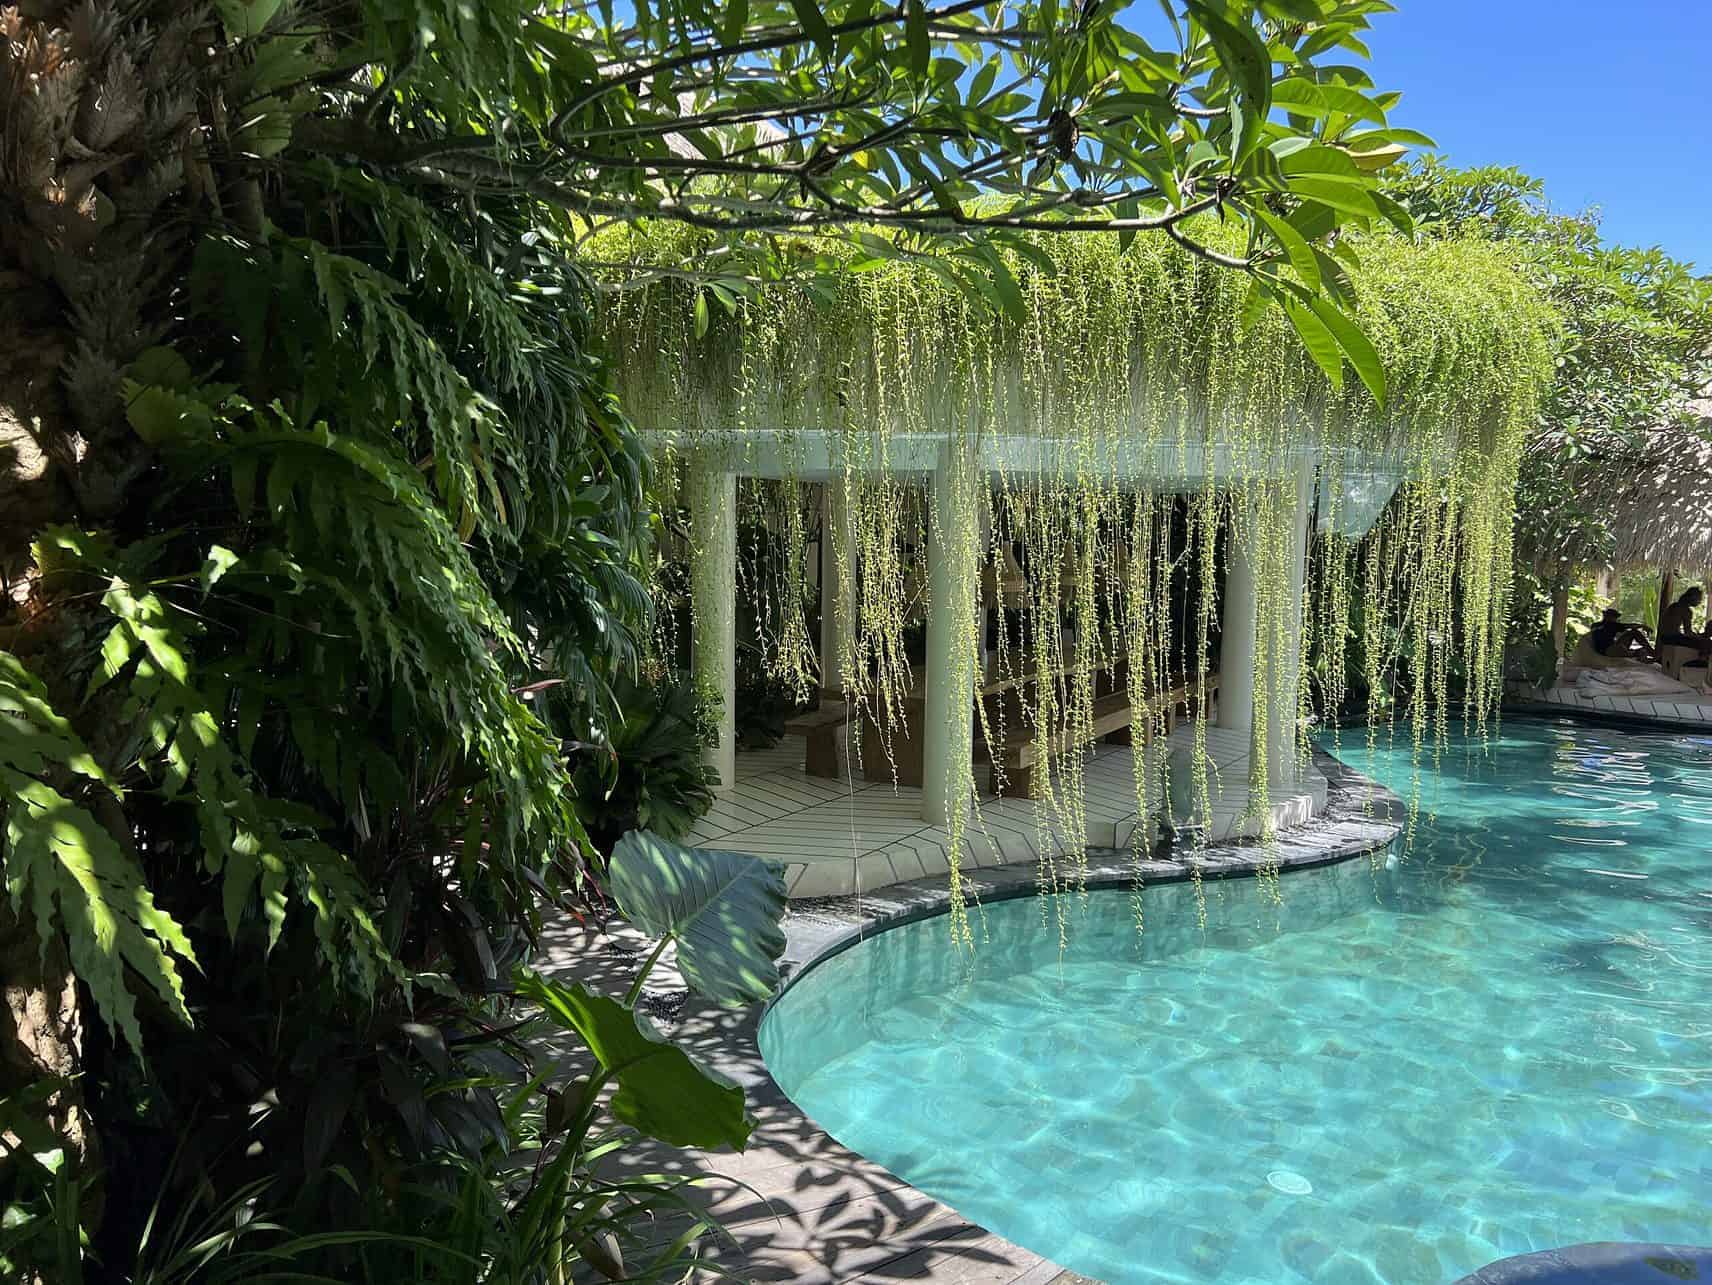 Pool at the Kima Beach Hotel in Bali, Indonesia